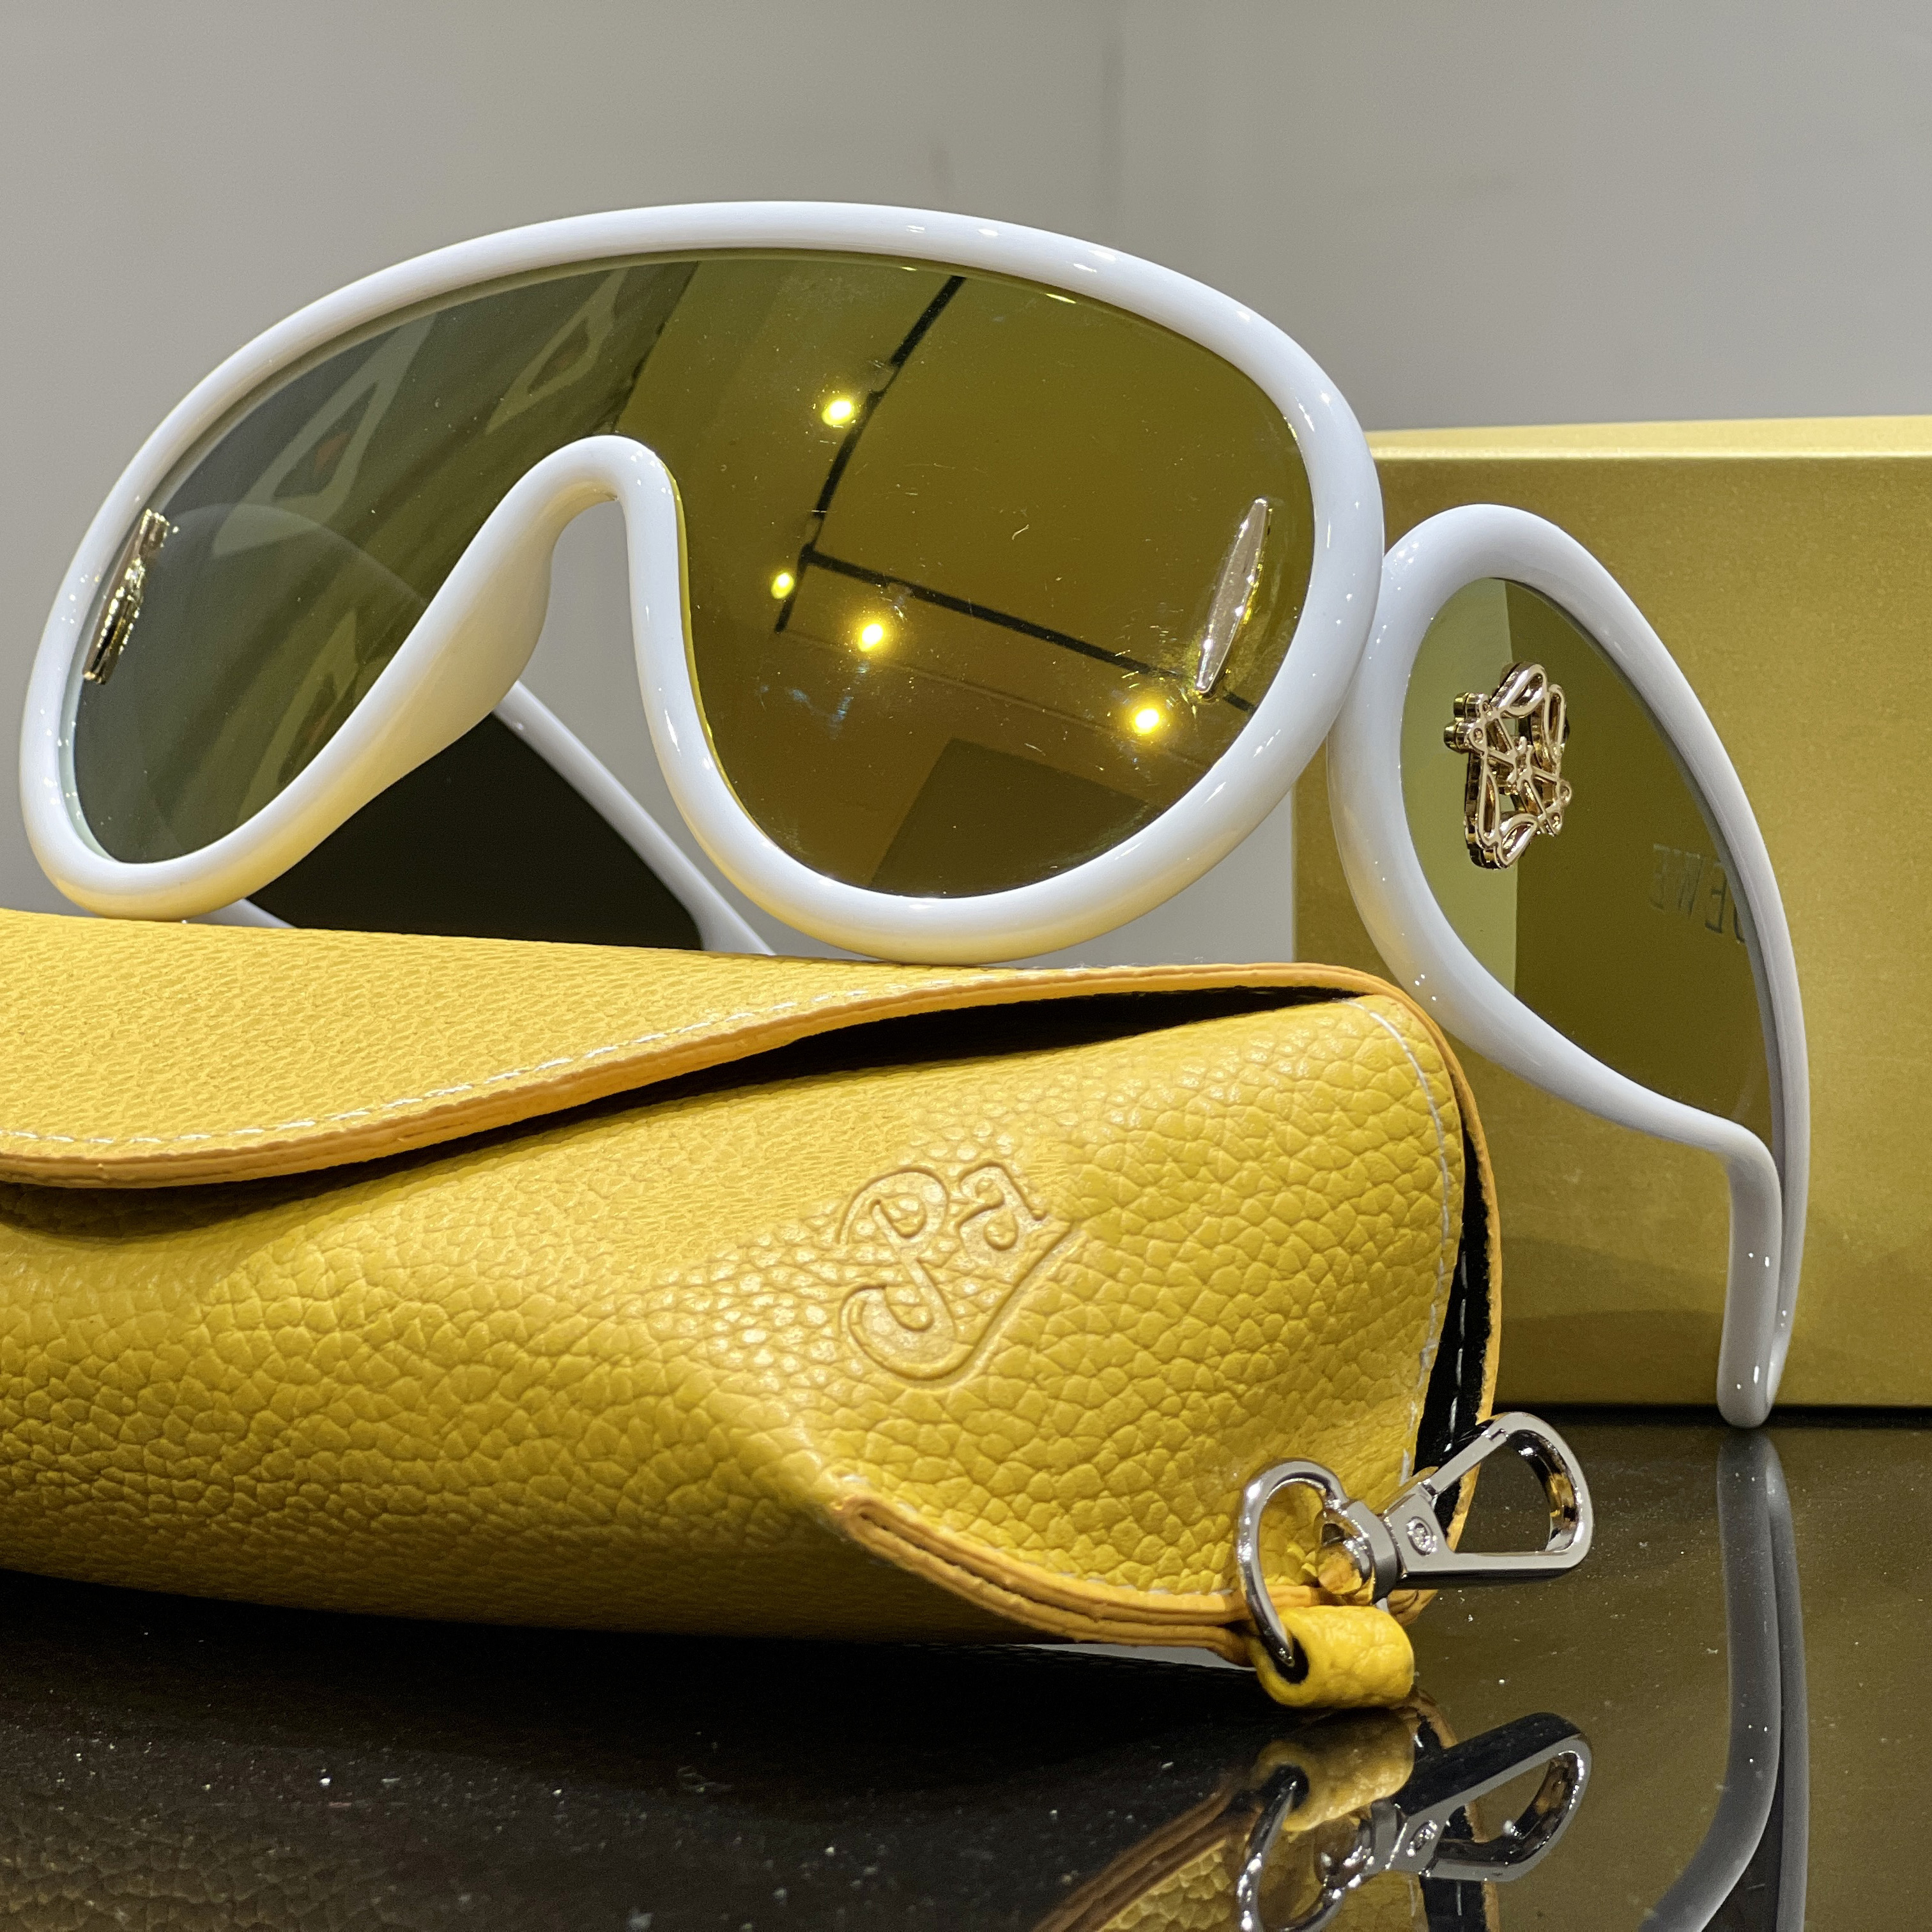 Designer Sunglasses for Women Glasses UV Protection Fashion Sunglass Letter Casual Eyeglasses Very Good